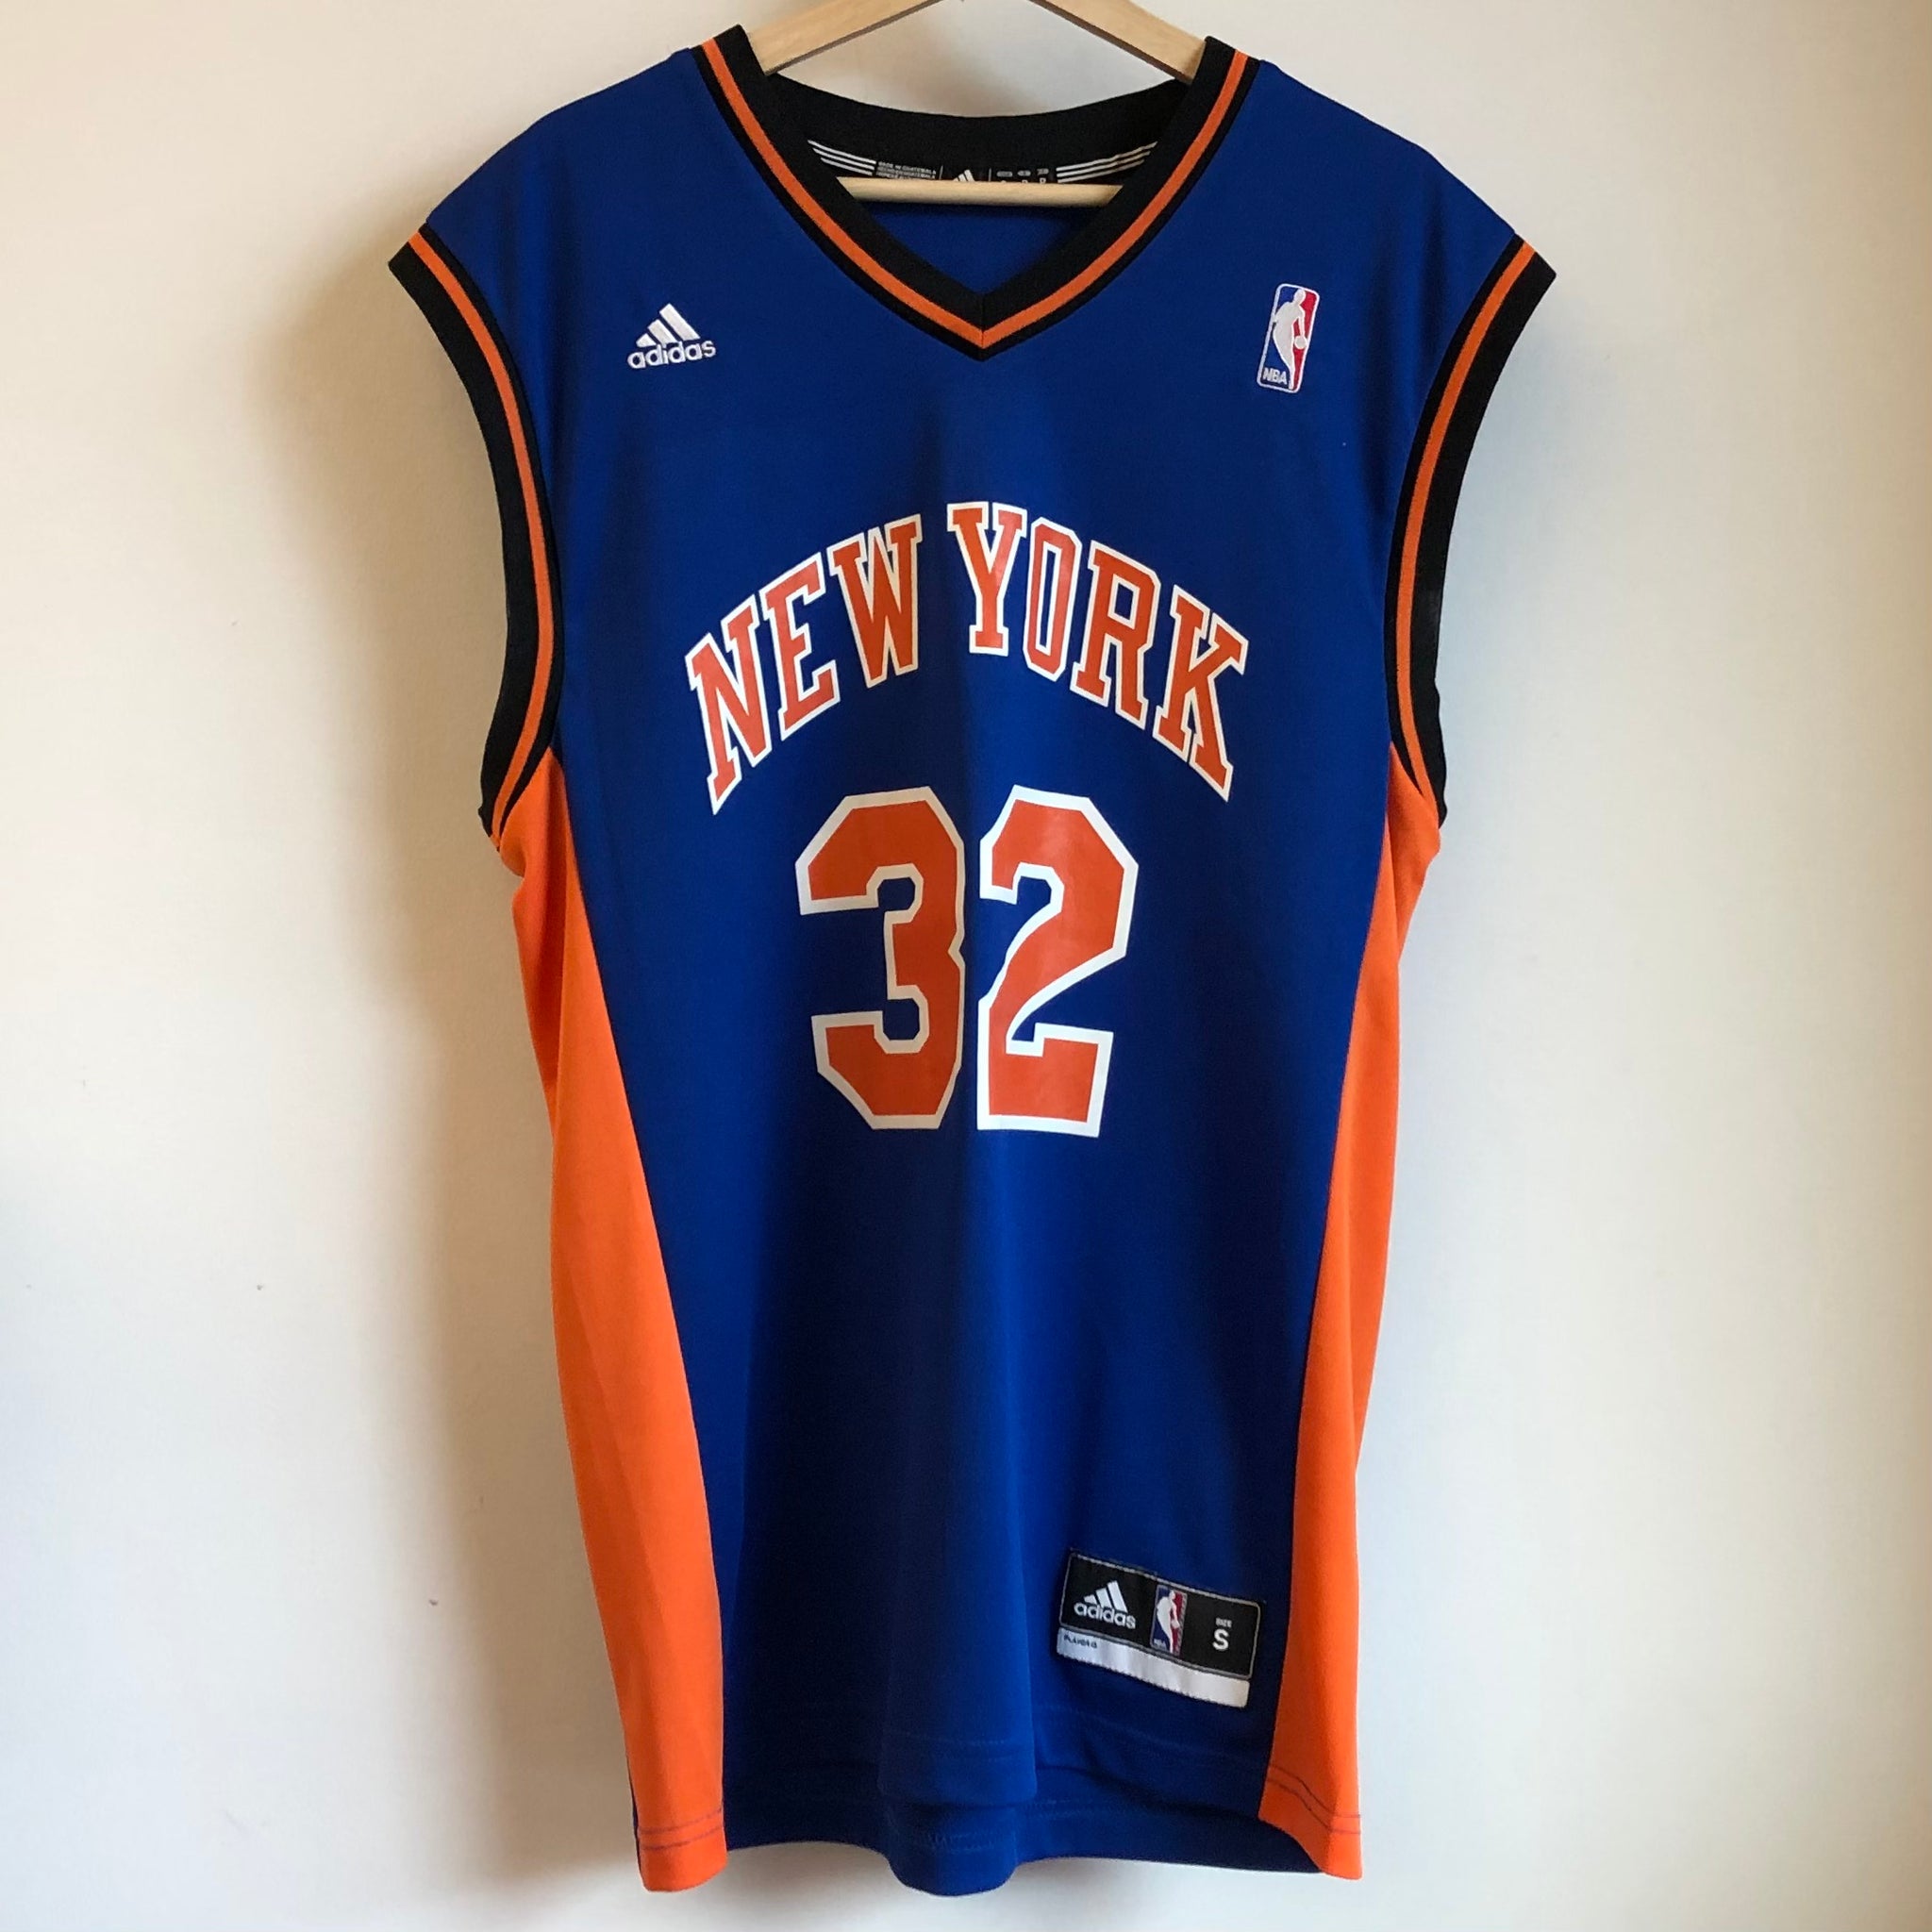 Adidas New York Knicks Swingman Jersey Size L